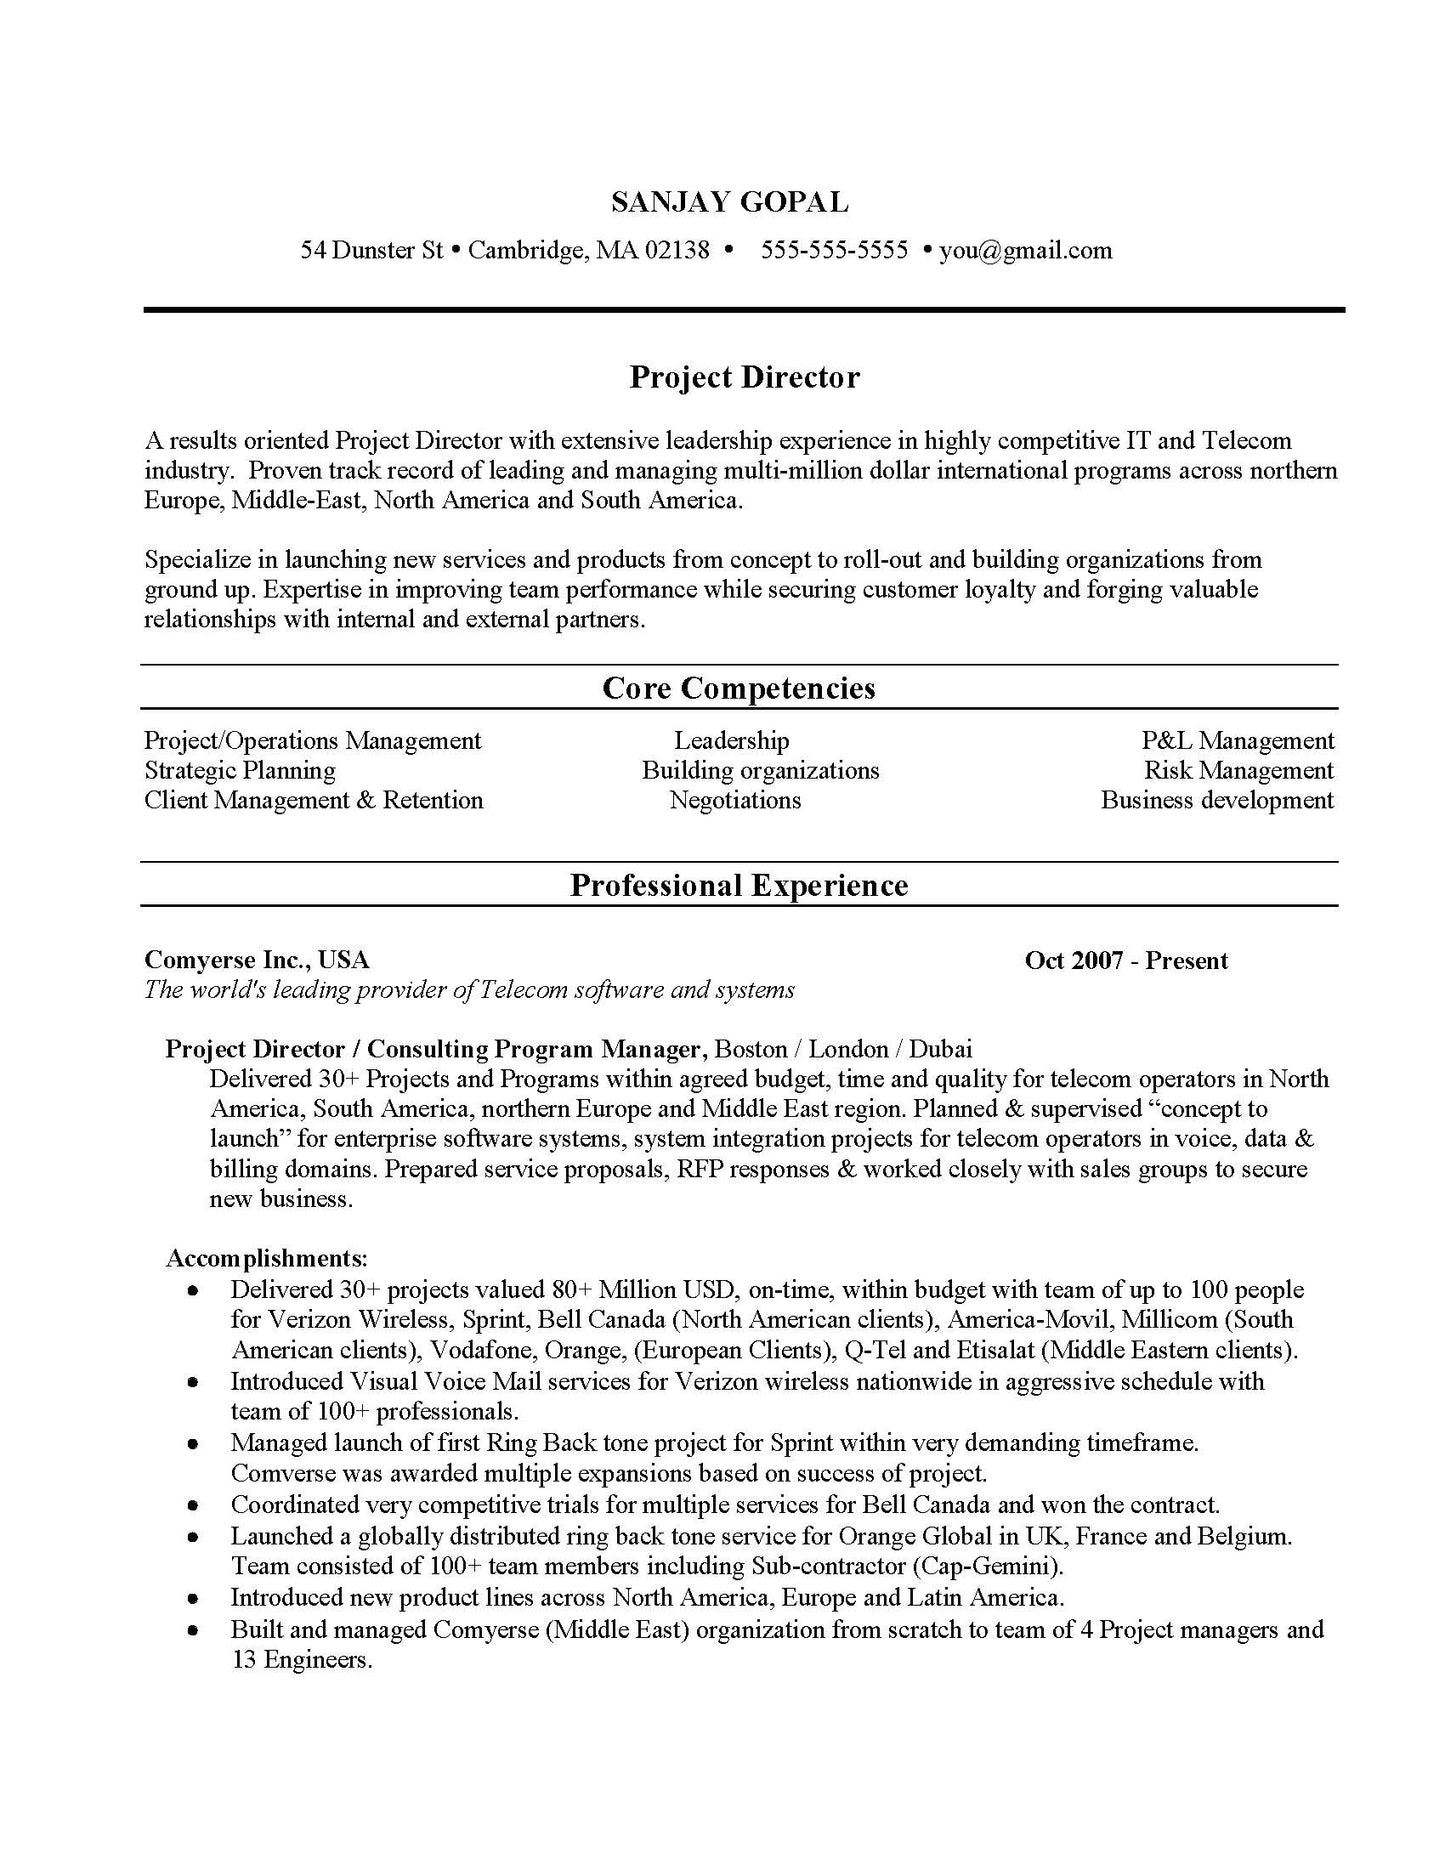 Resume + LinkedIn Profile Build